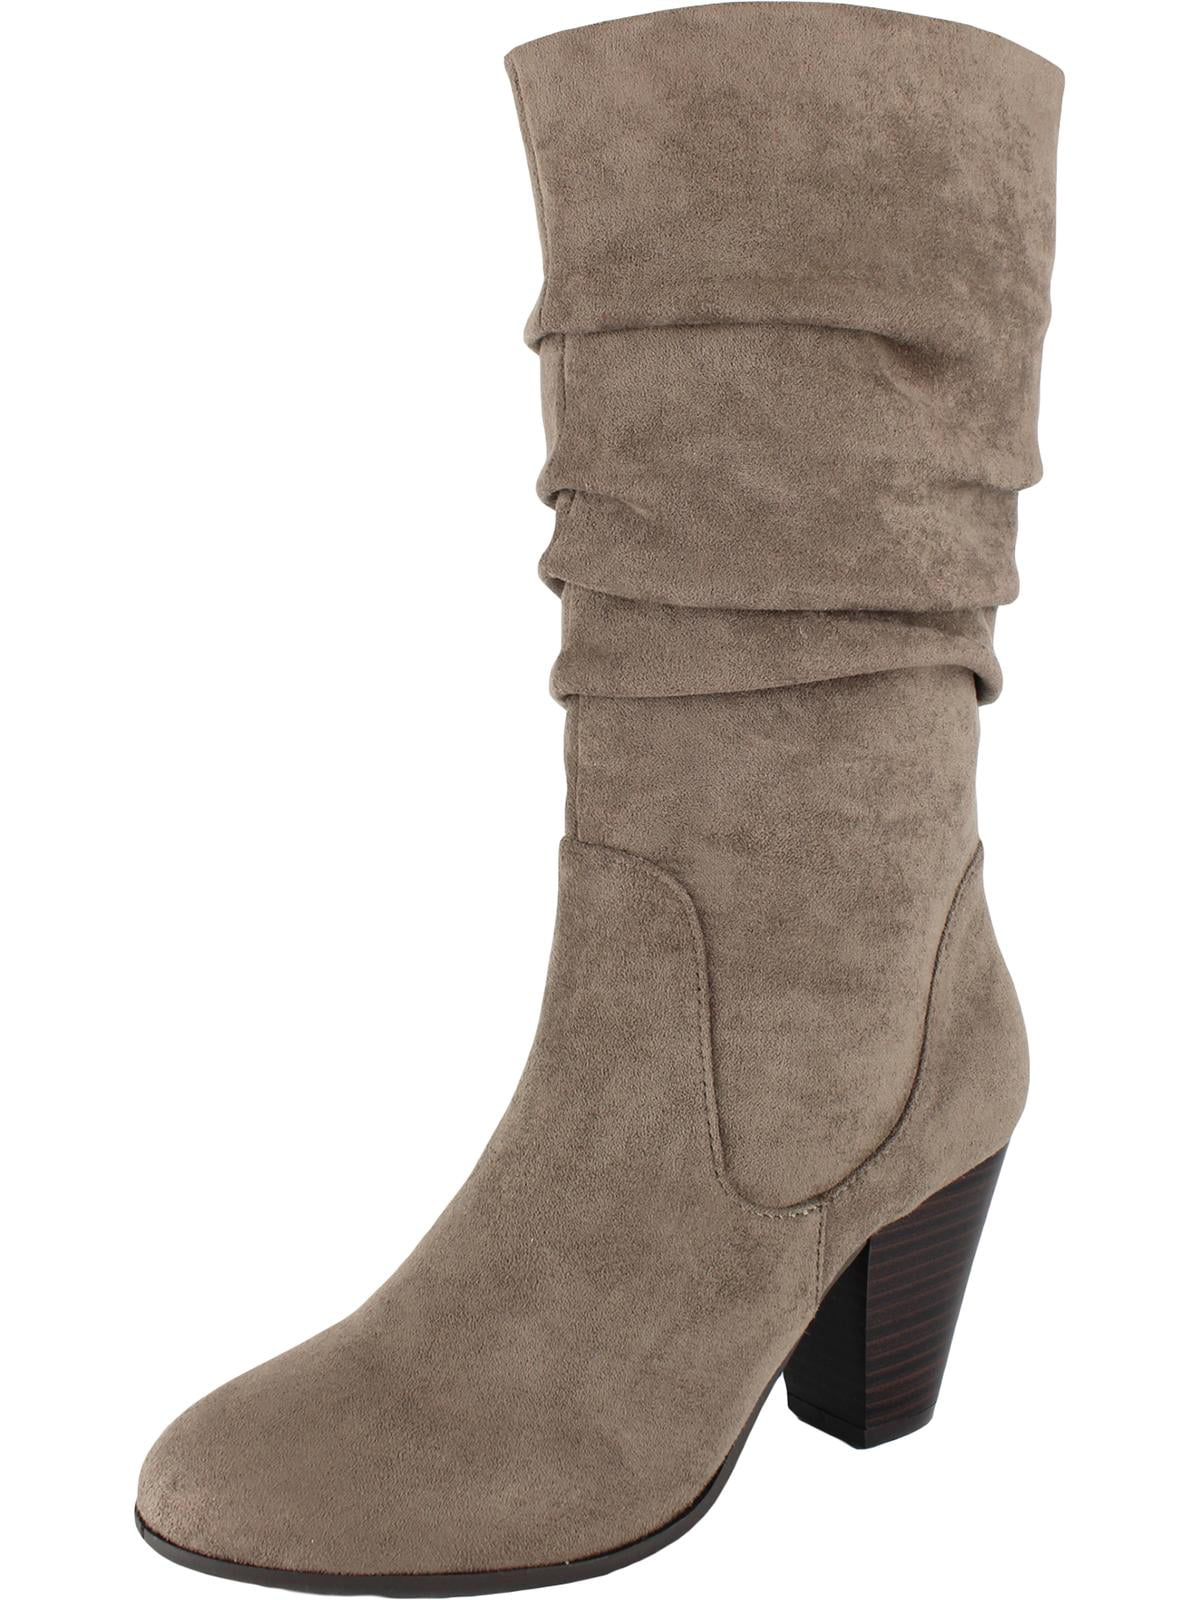 Esprit Women's Oliana Closed Toe Mid Calf Fashion Boots Brown Size 8 ...